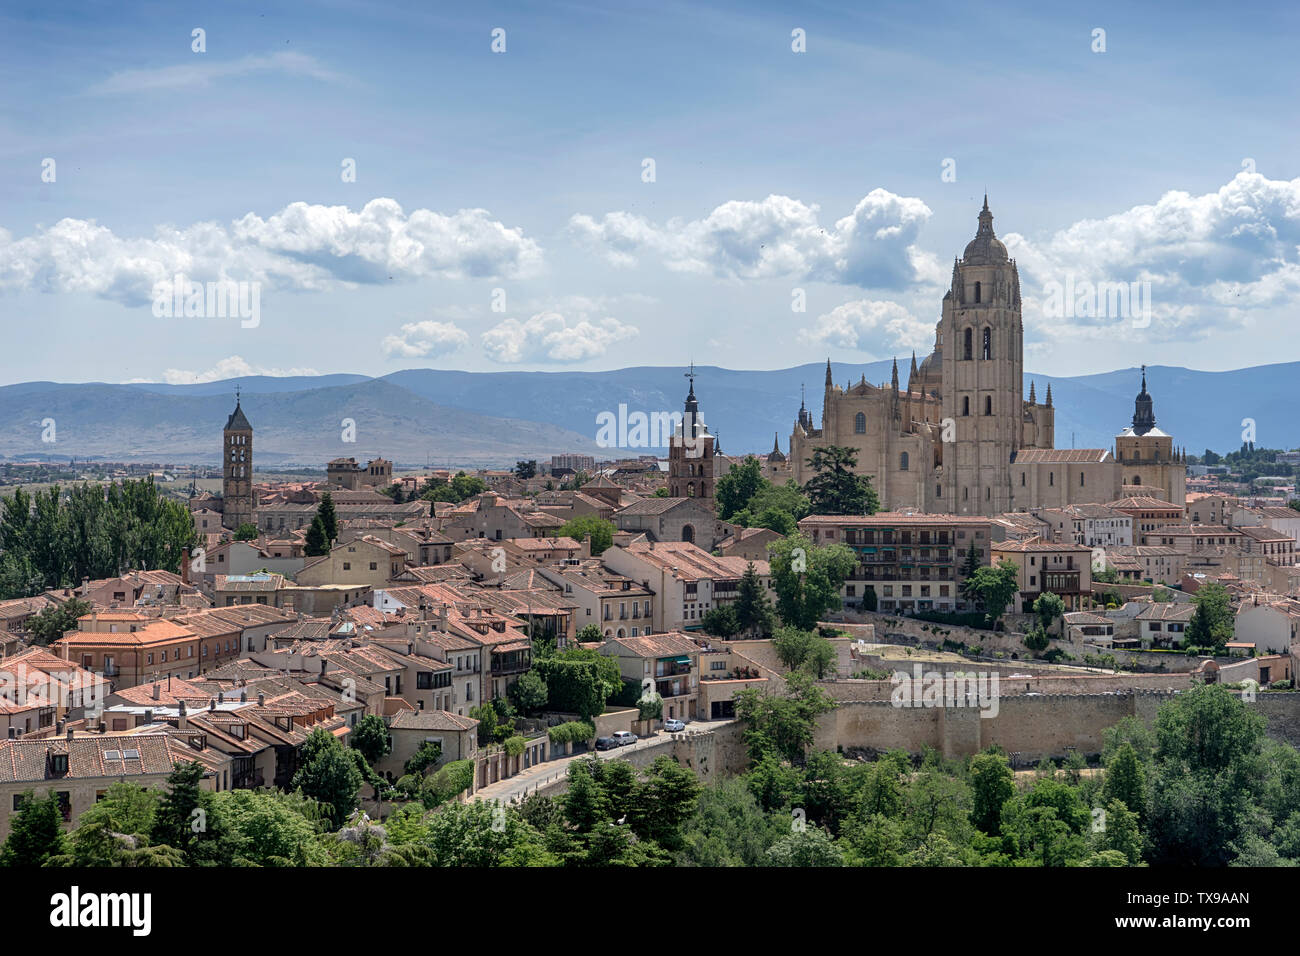 Ancient medieval city of Segovia, Spain Stock Photo